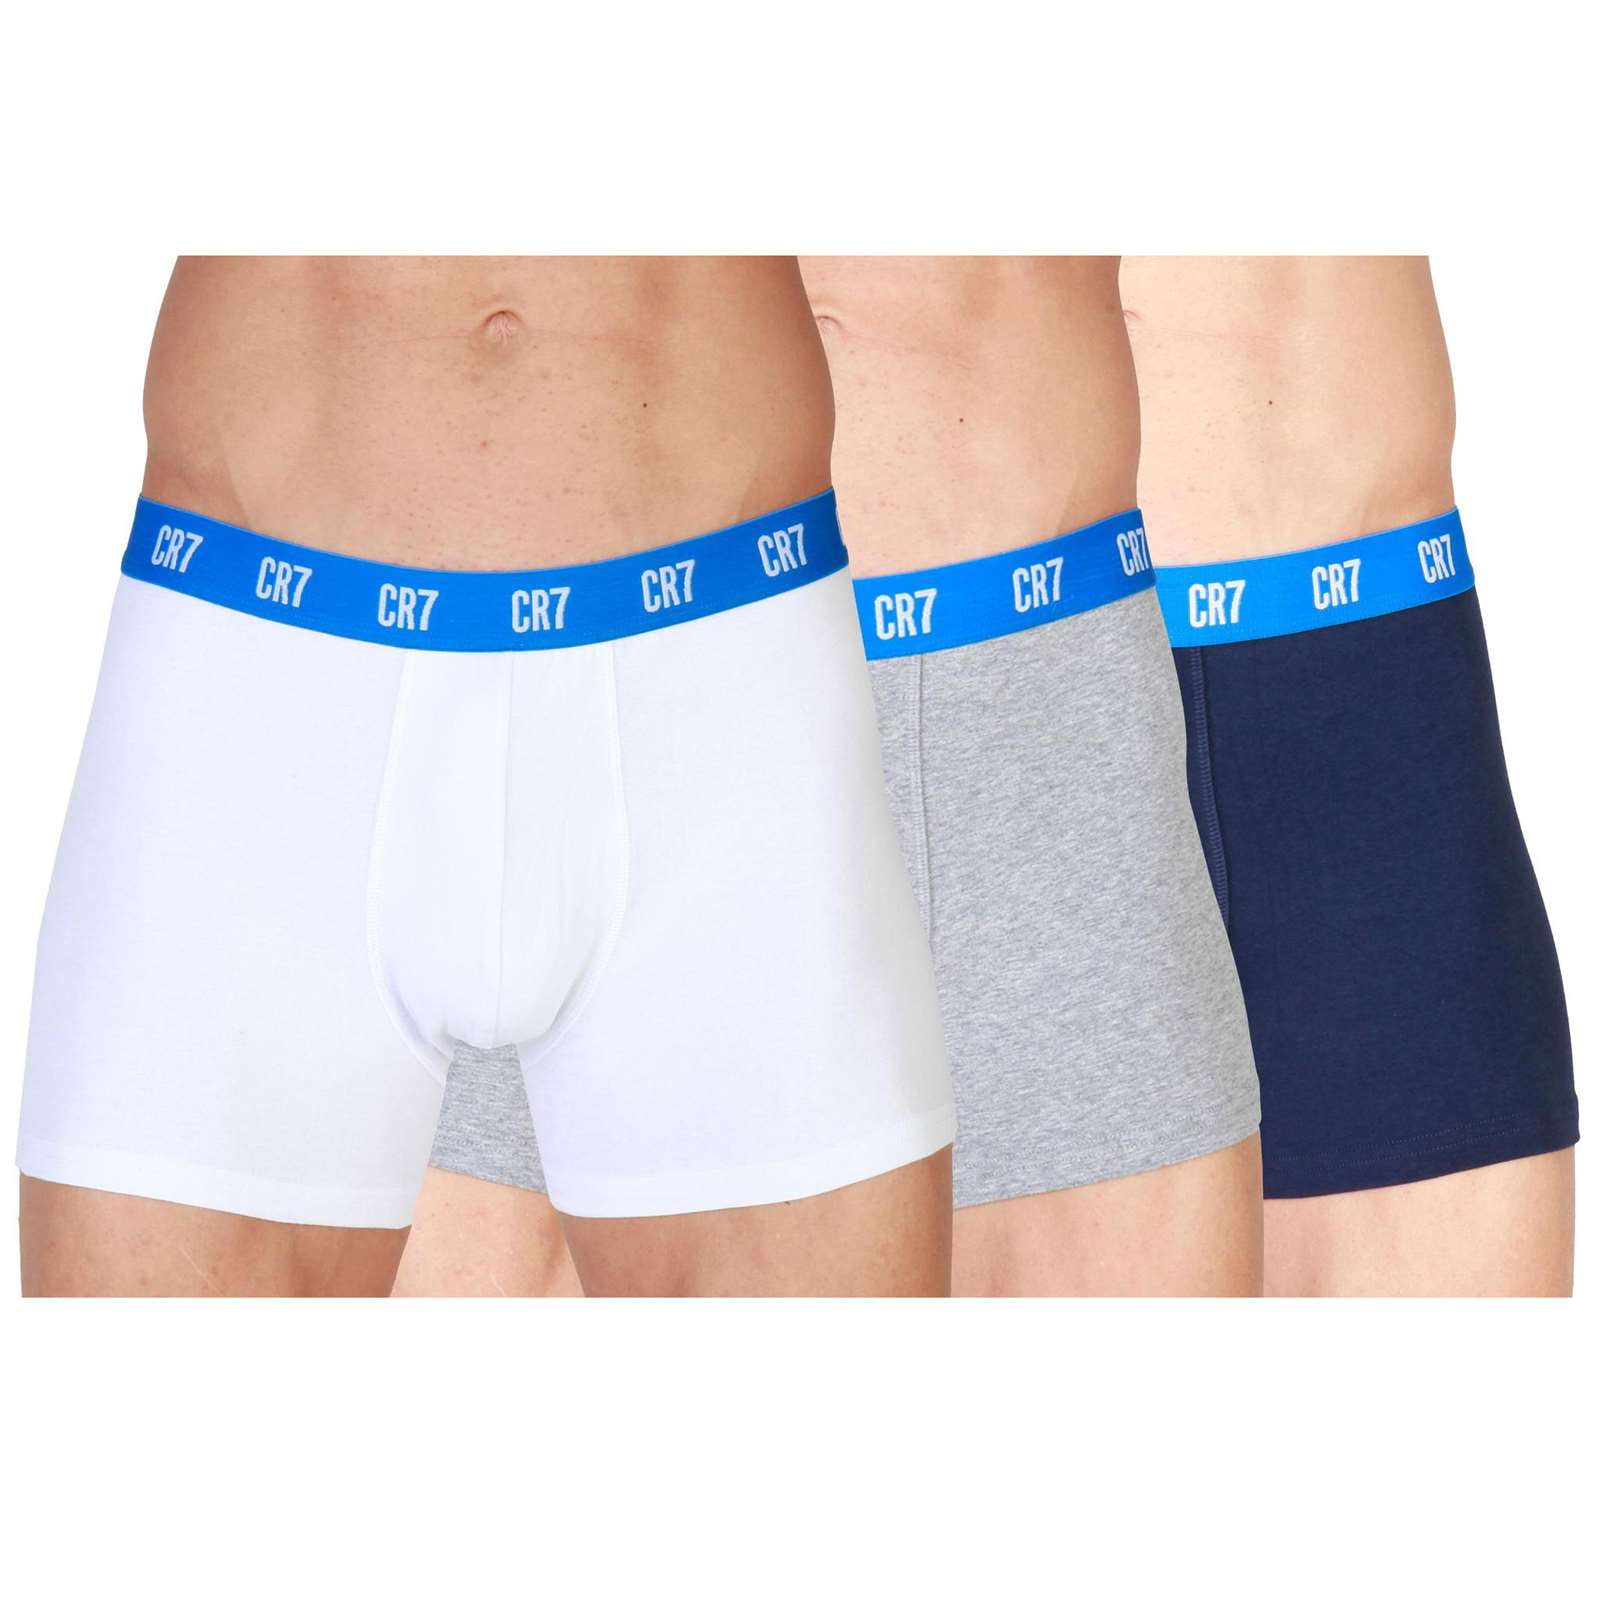 Boxer Underpants Art CR7 Wallpaper Panties Men's Ventilate